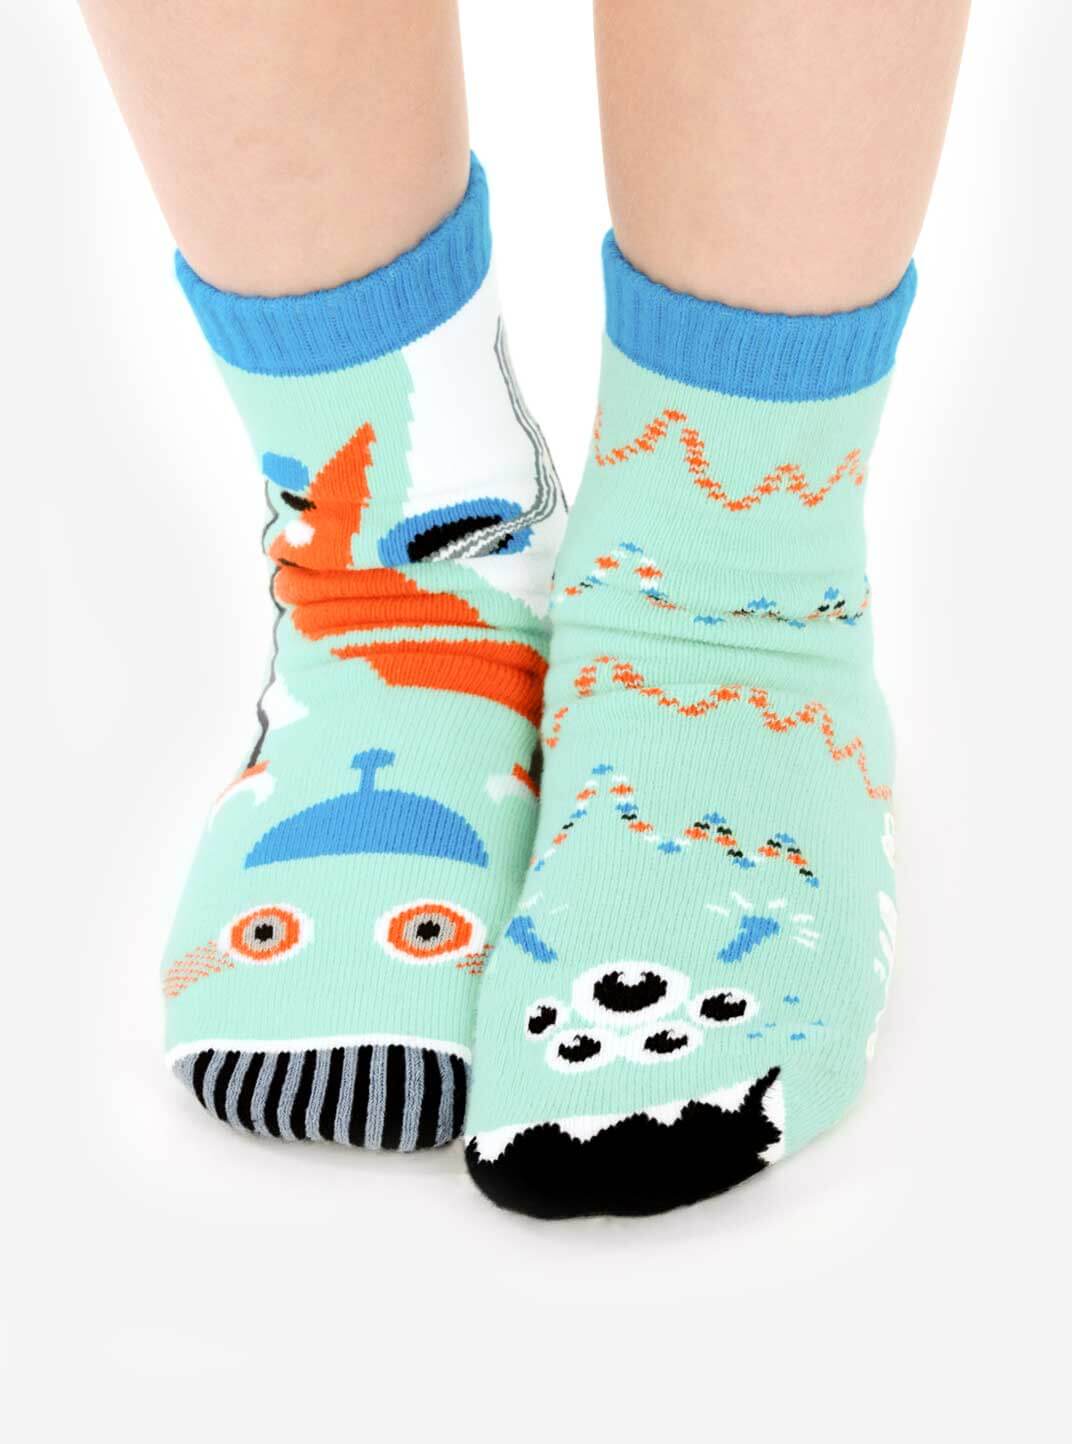 Pals Socks - Robot & Alien Non-Slip Mismatched Toddler Socks